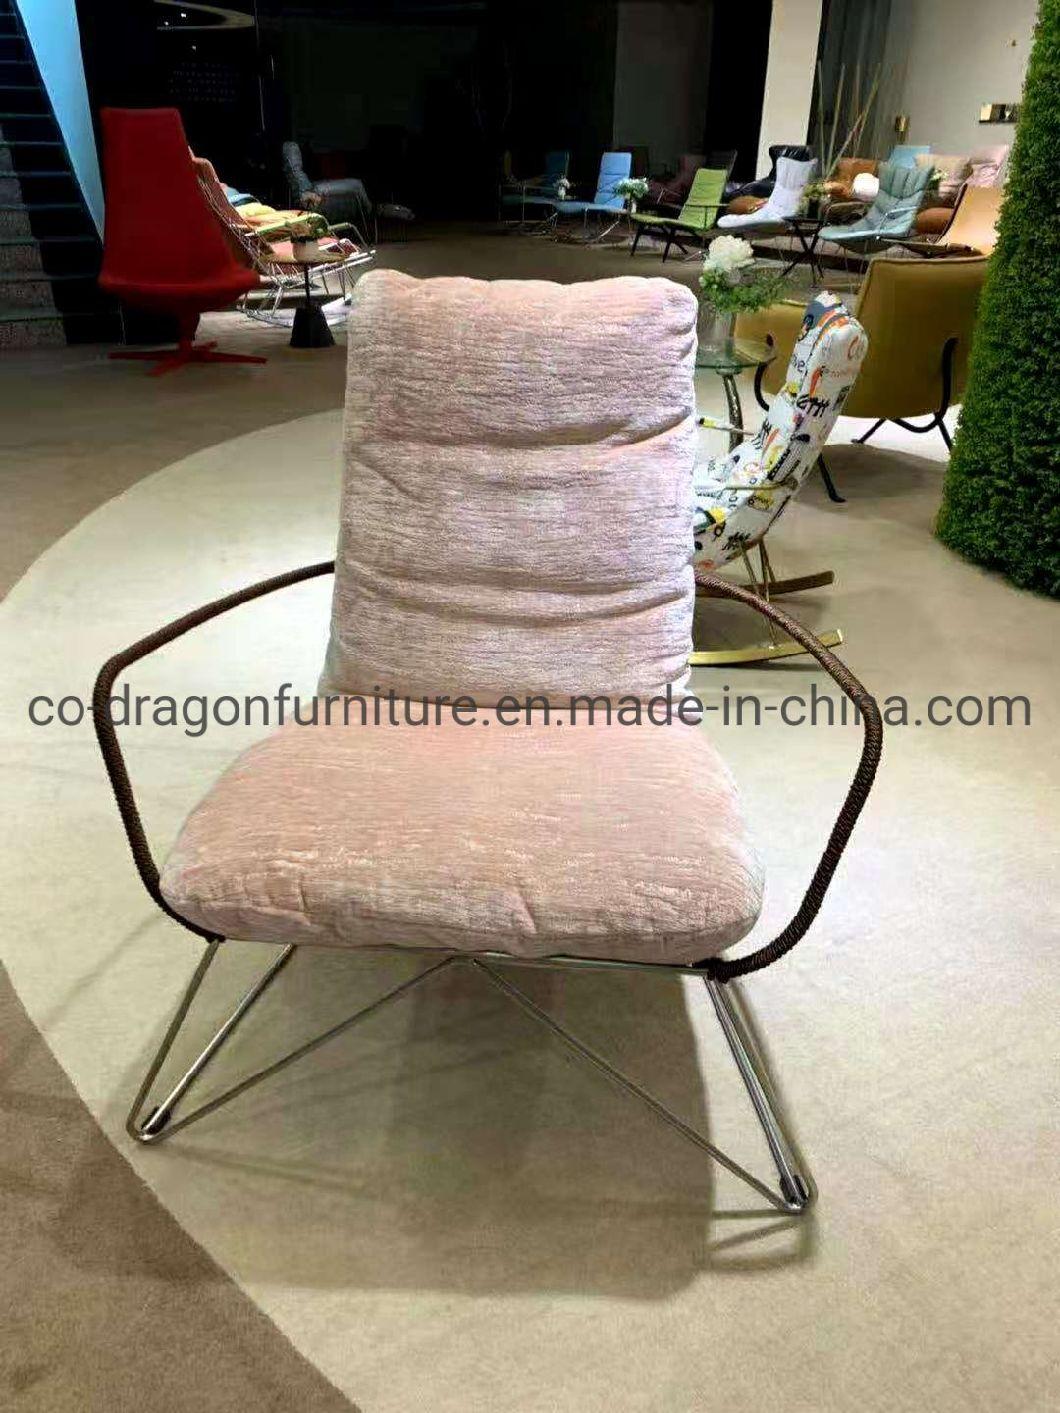 Unique Design Fabric Leisure Sofa Chair for Living Room Furniture